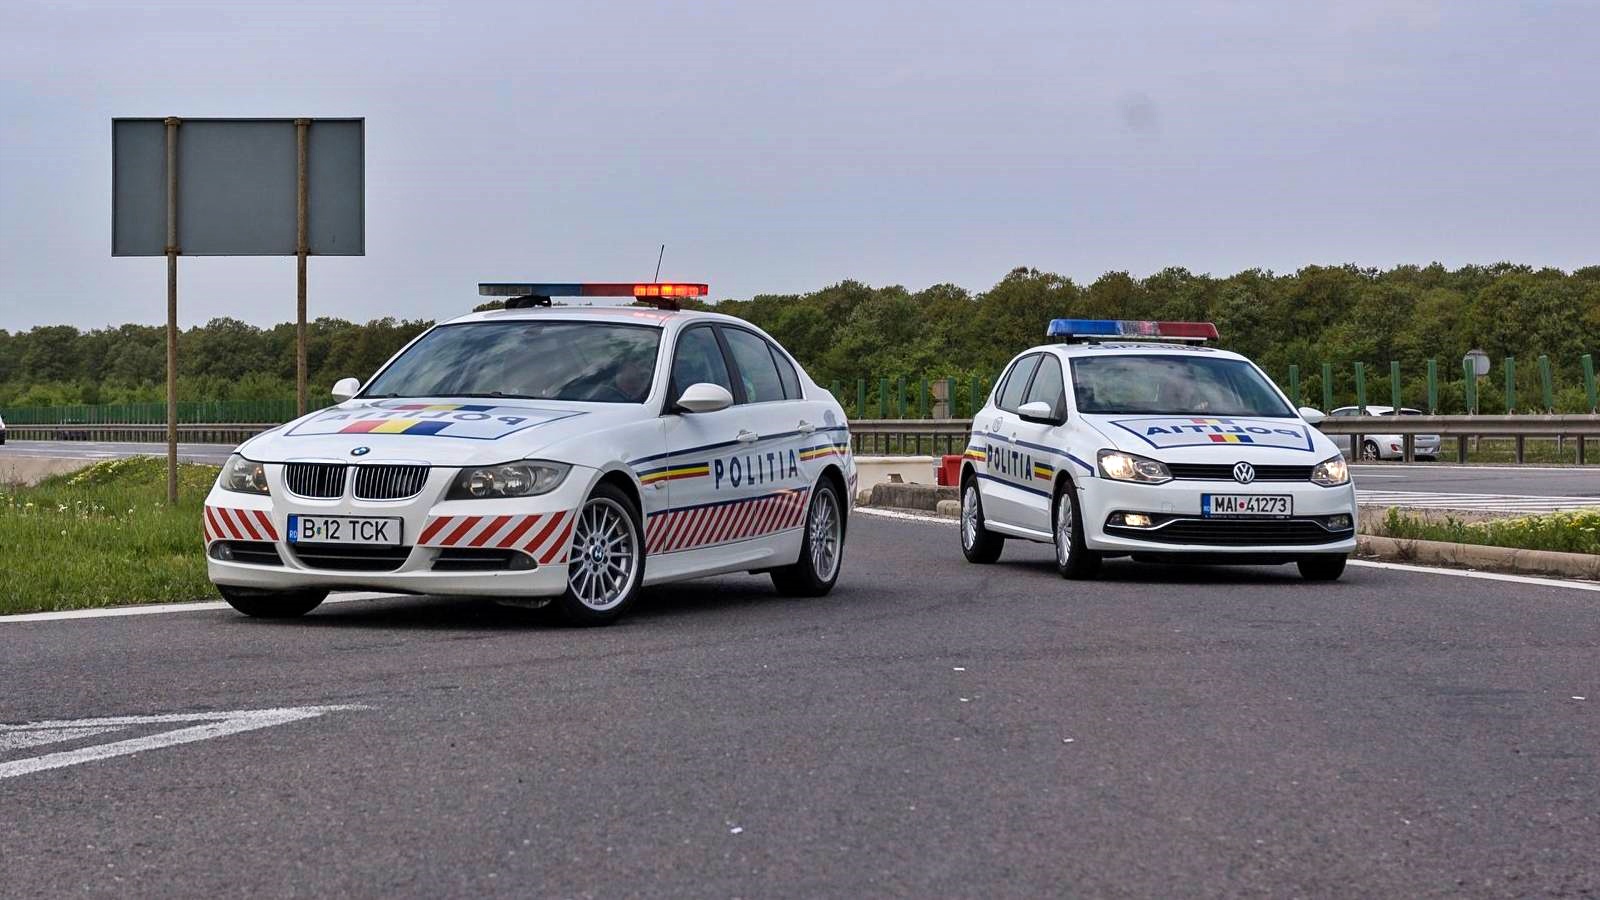 Ny advarsel rumænsk politivejtrafik